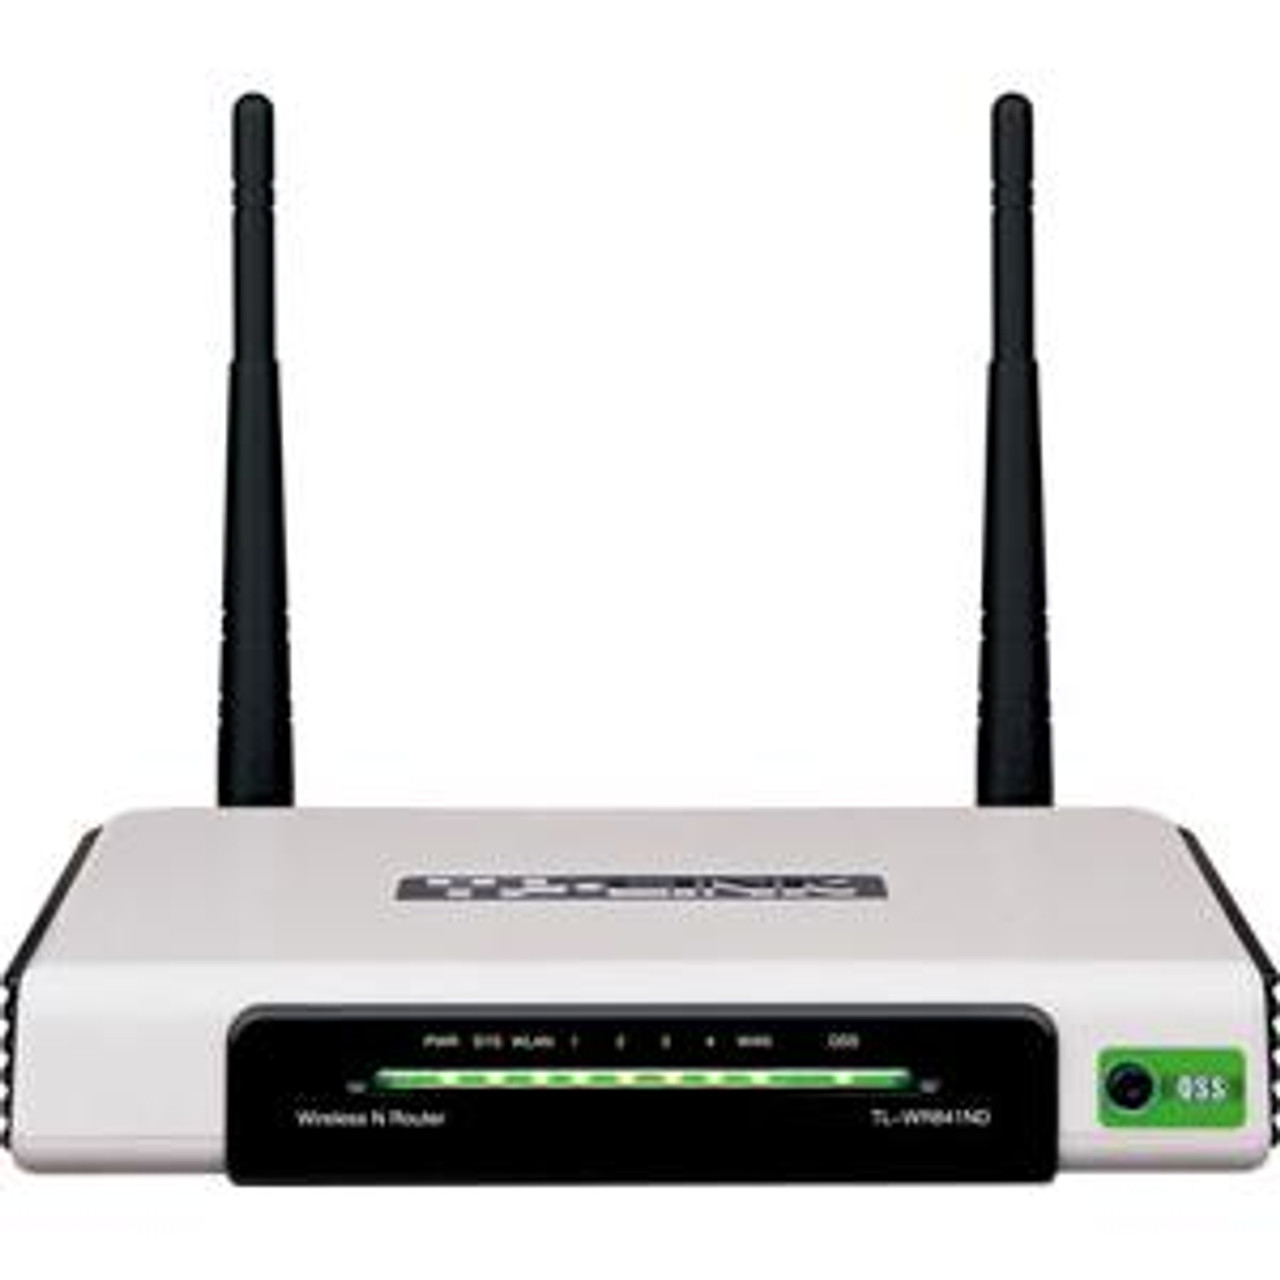 TL-WR841ND TP-LINK Wireless Router 300 Mbps 4 x 10/100Base-TX LAN 1 x 10/100Base-TX WAN IEEE 802.11n (draft) (Refurbished)